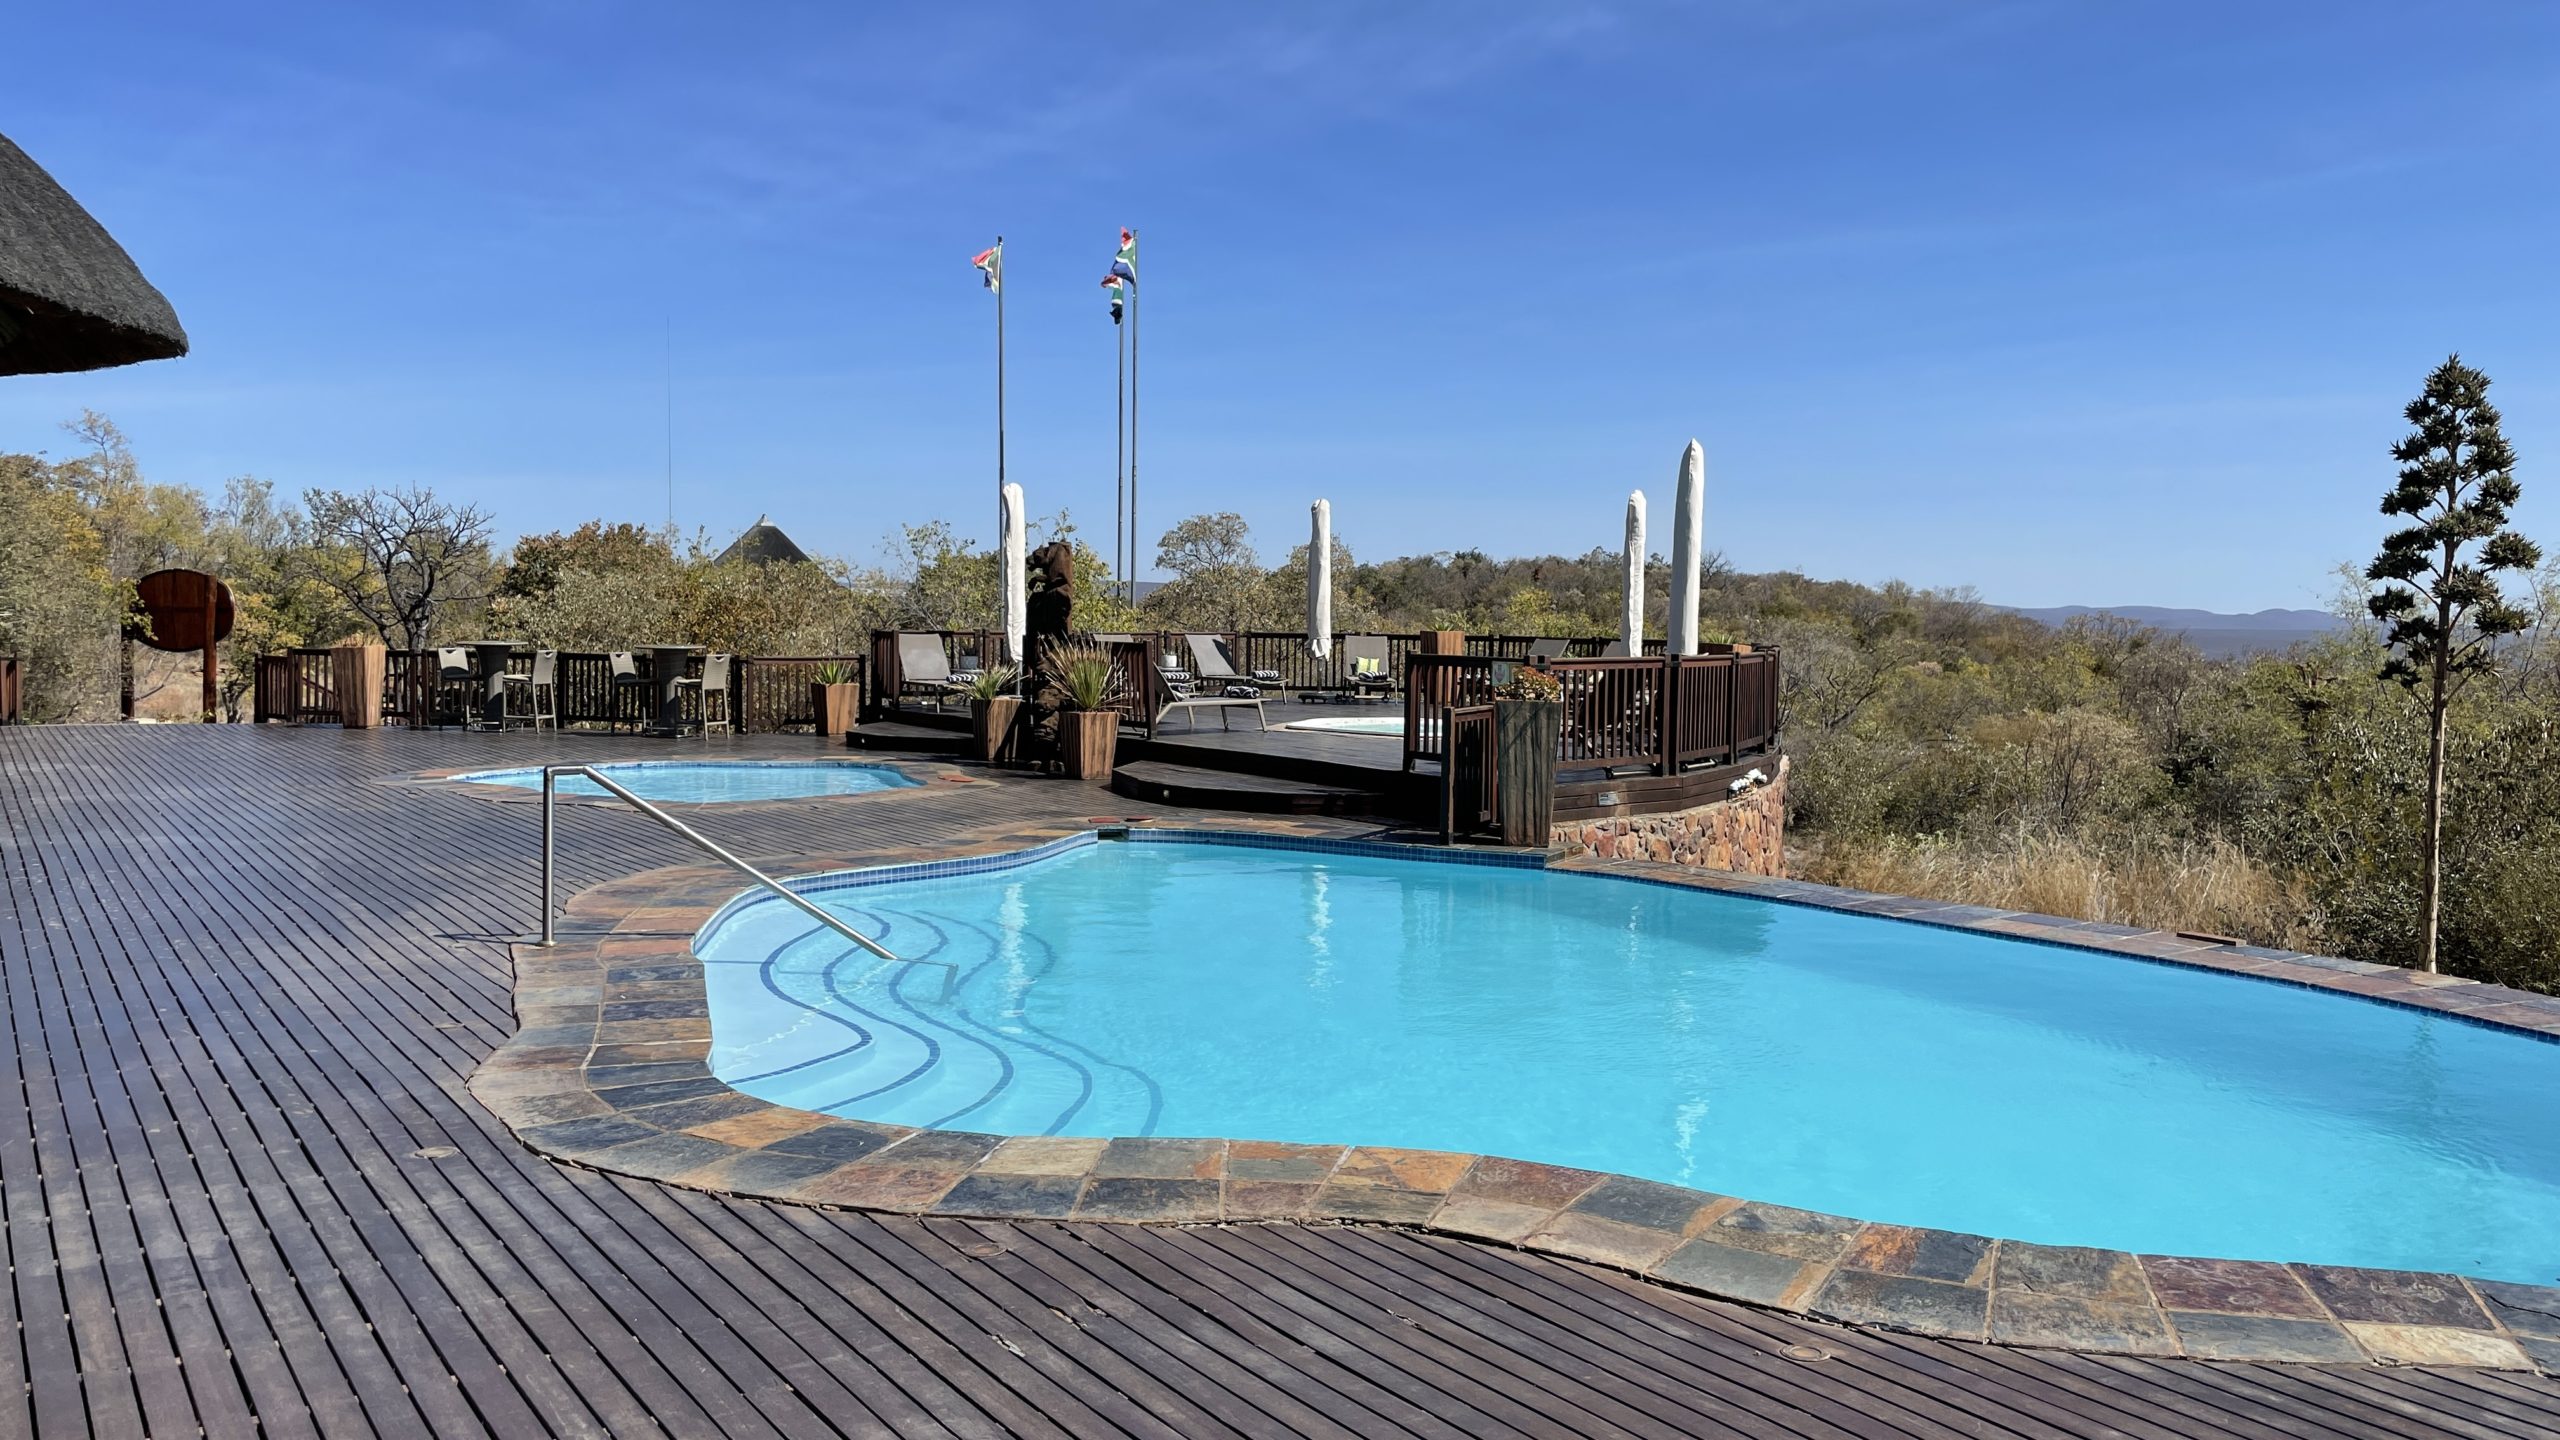 Sebatana Private Reserve Outdoor Swimming Pool Rhino Lodge Point Hacks by Daniel Sciberras